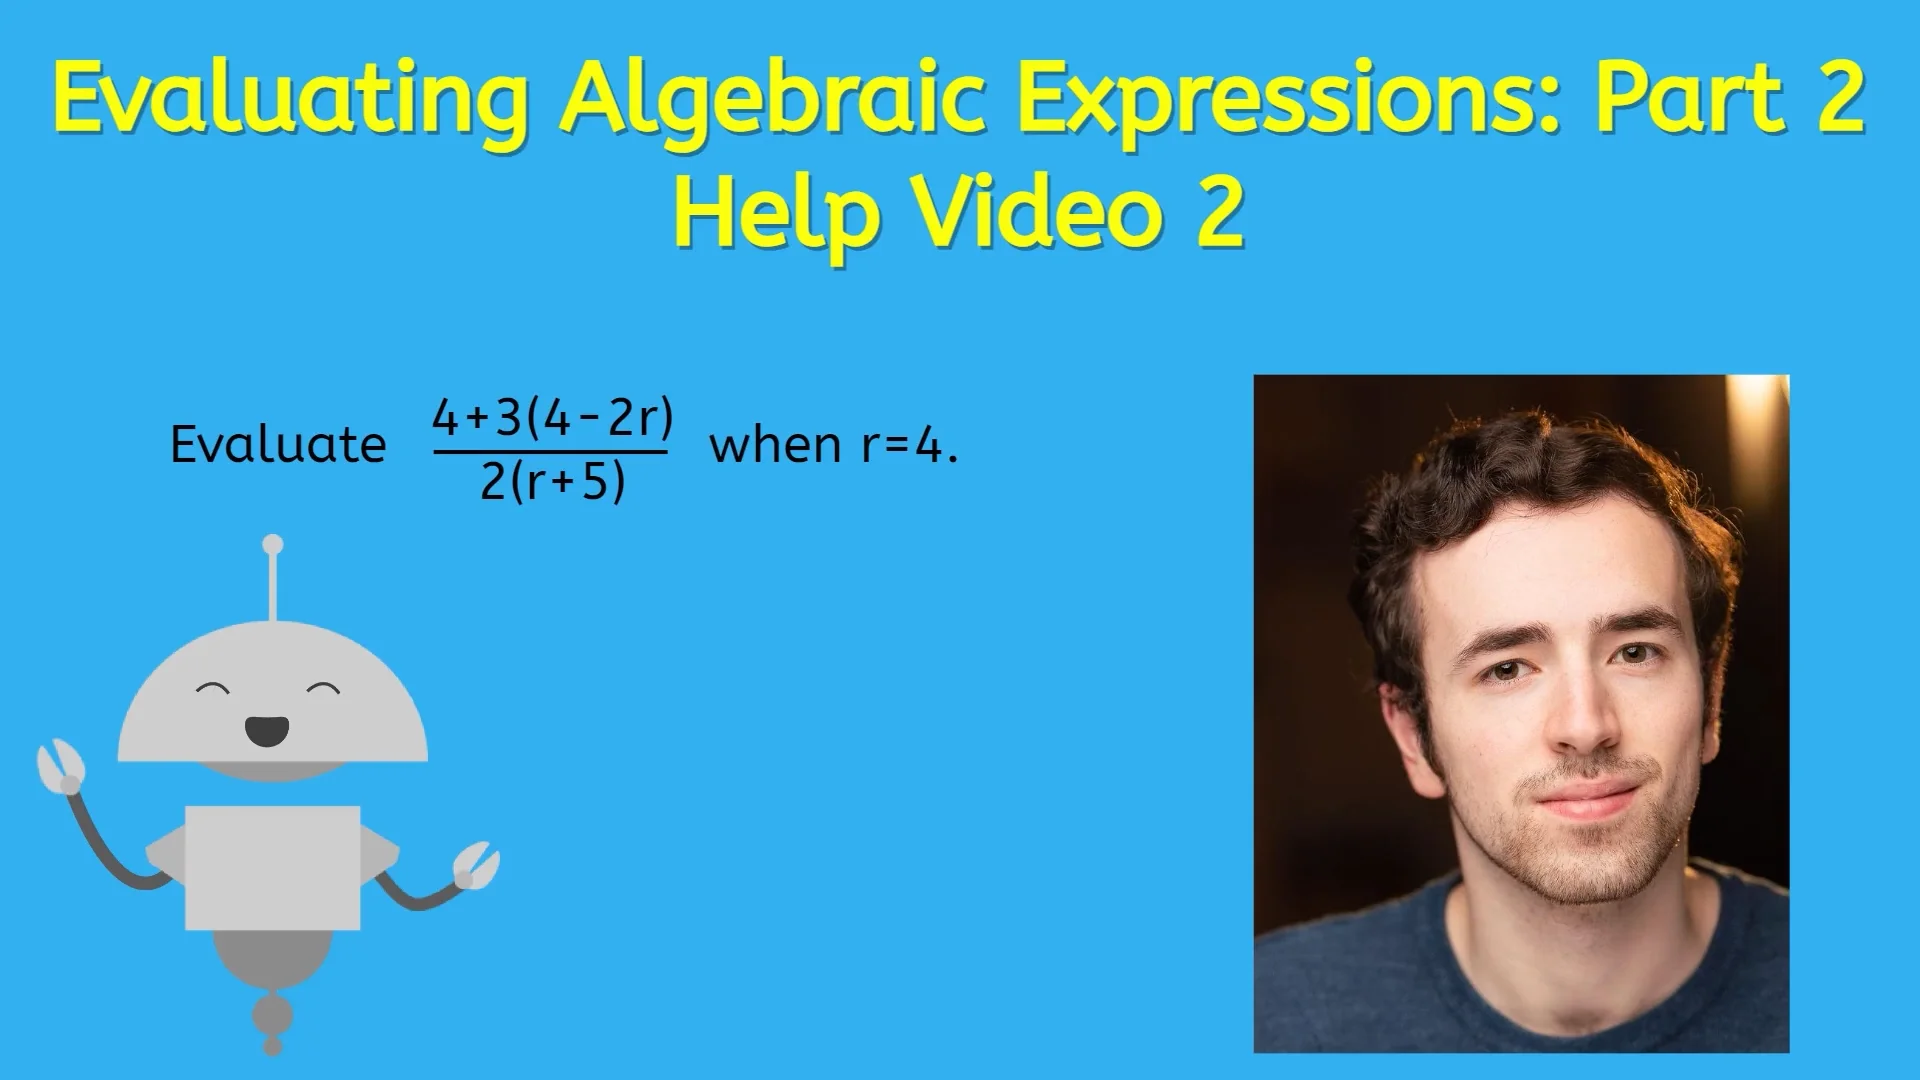 evaluating-algebraic-expressions-part-2-help-video-2-on-vimeo